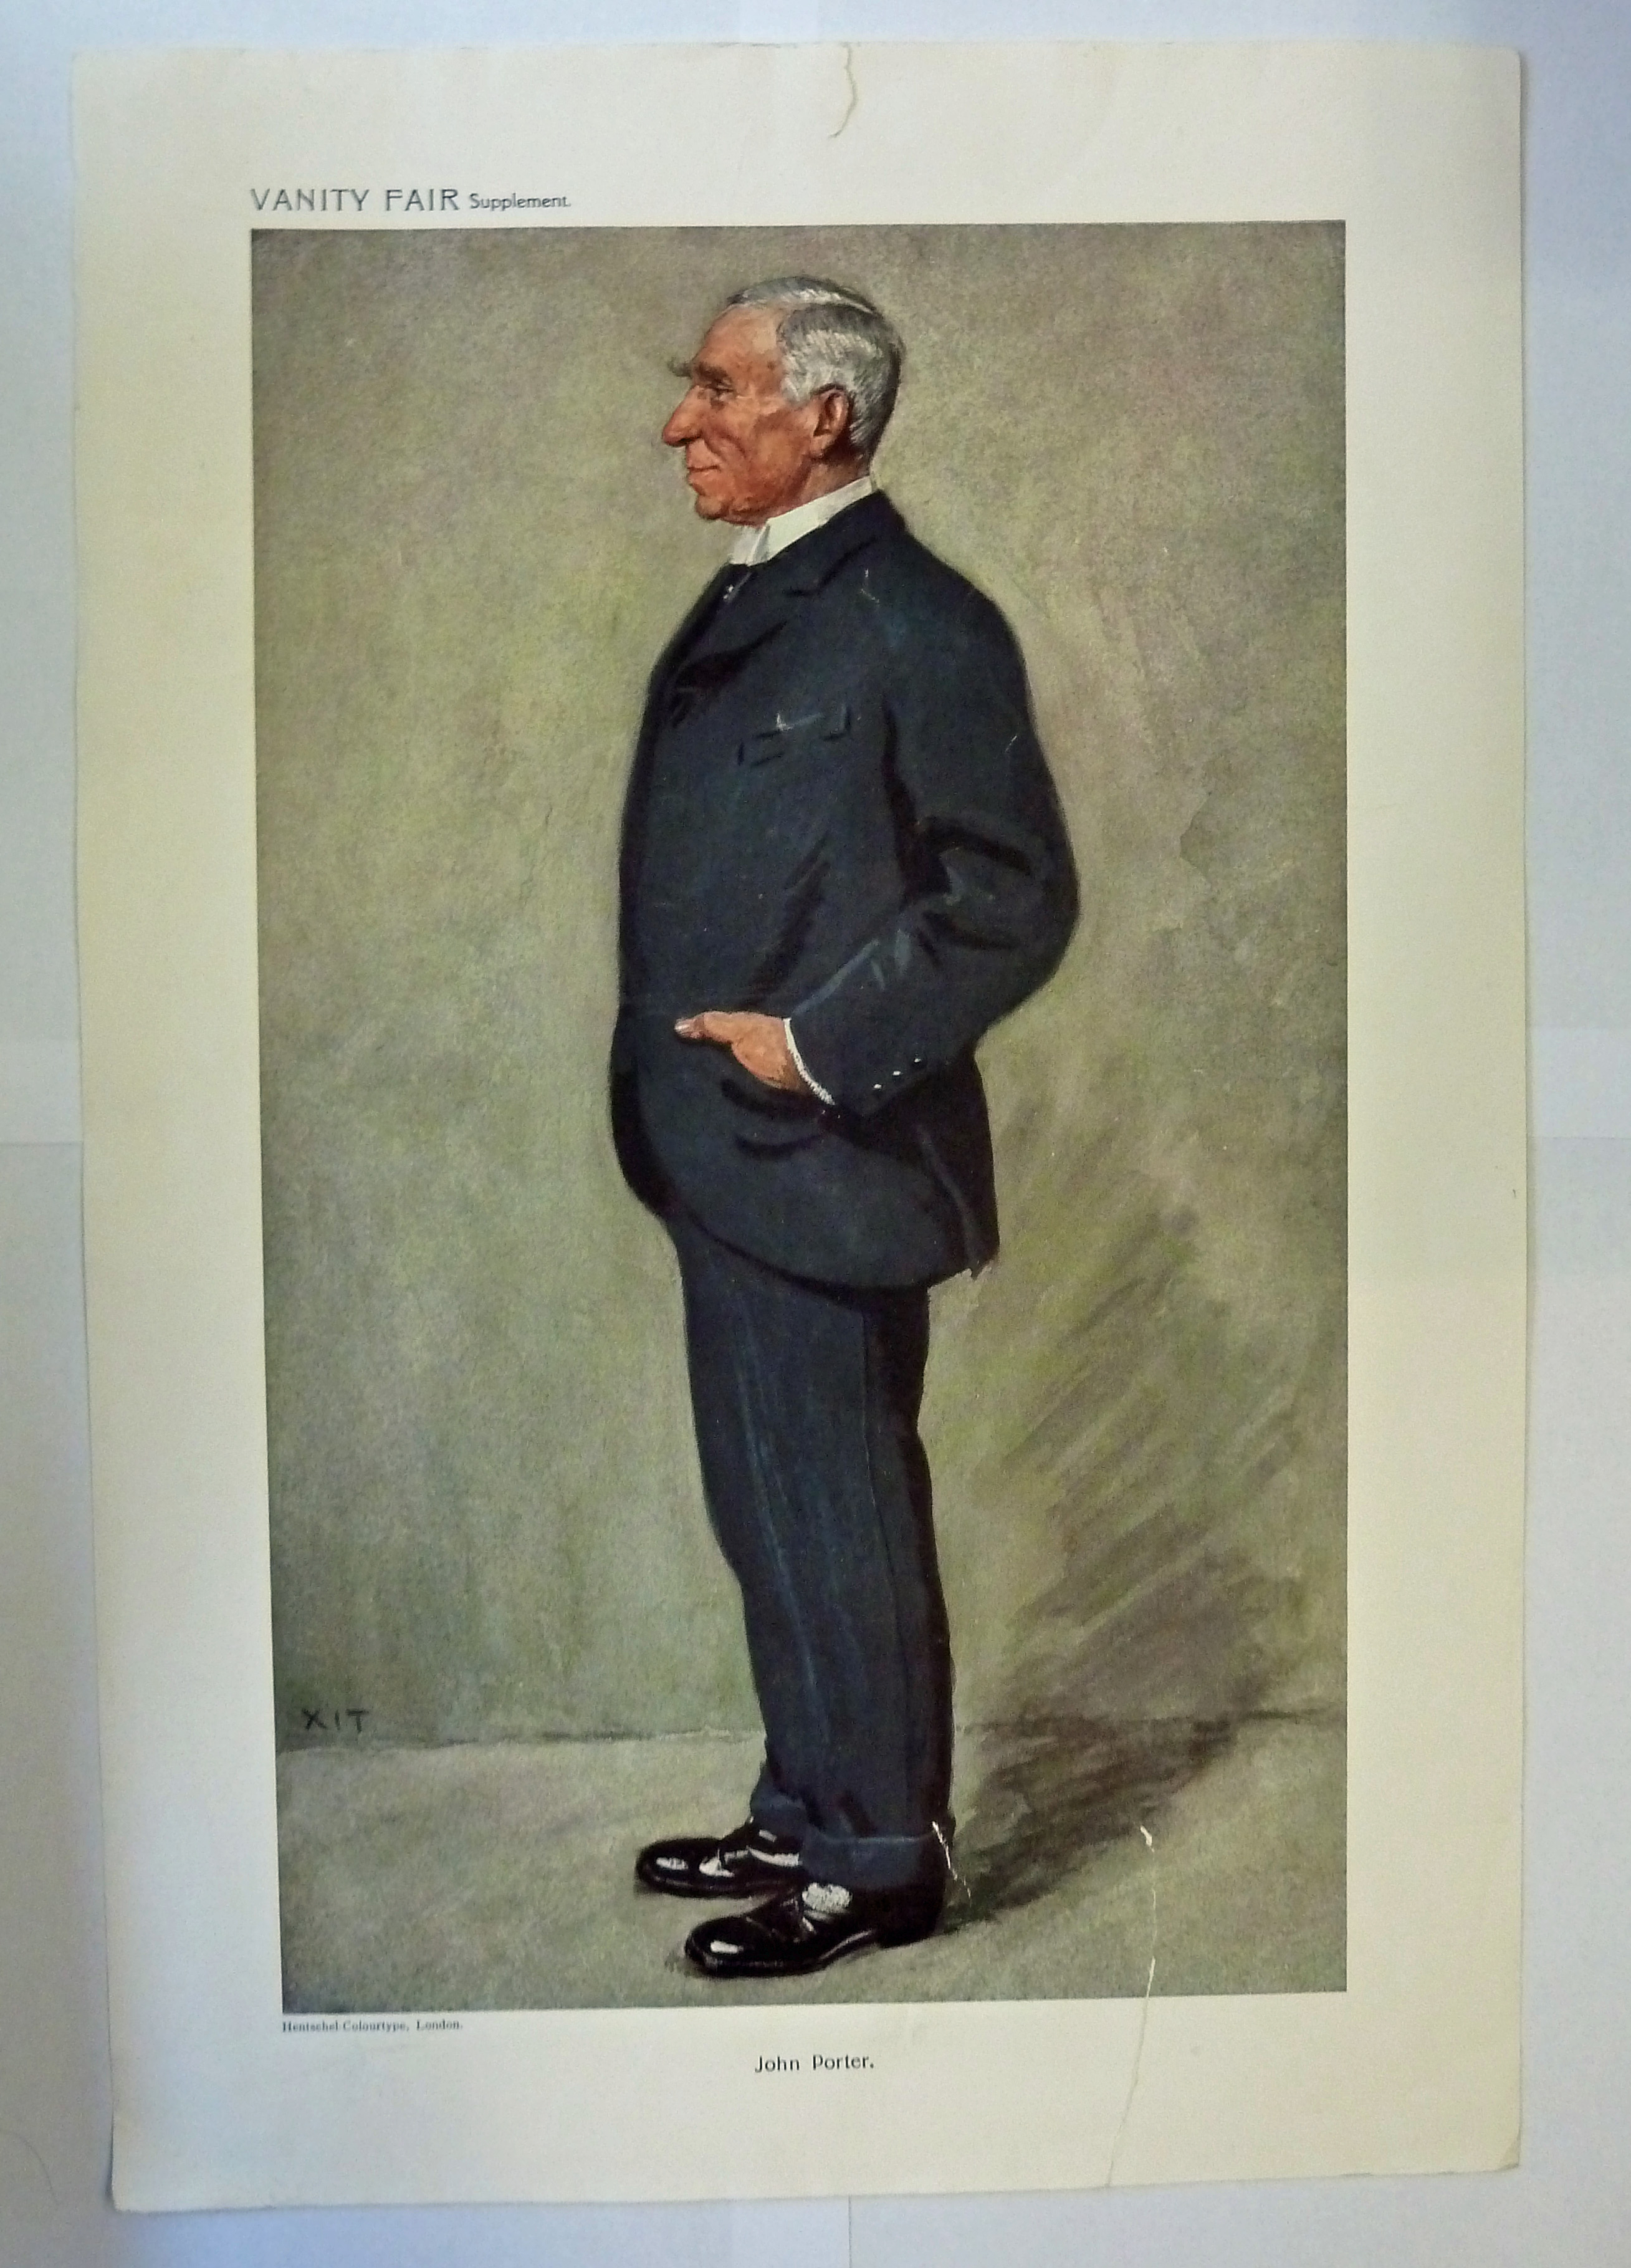 Original Vanity Fair Supplement John Porter 1910